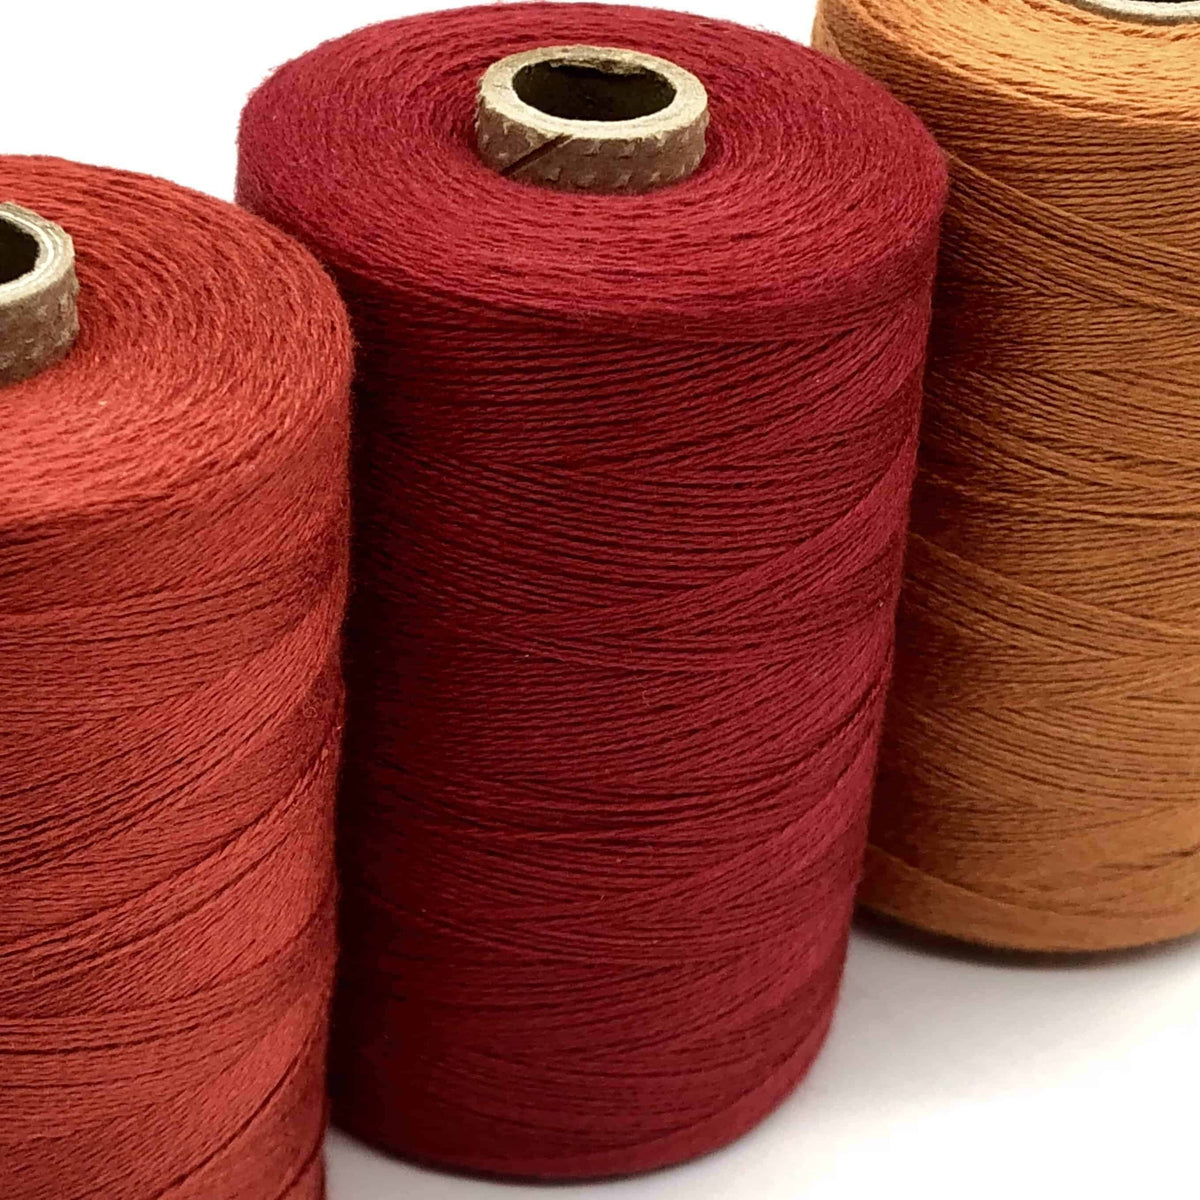 Bamboo-Weaving-Yarn-Reds